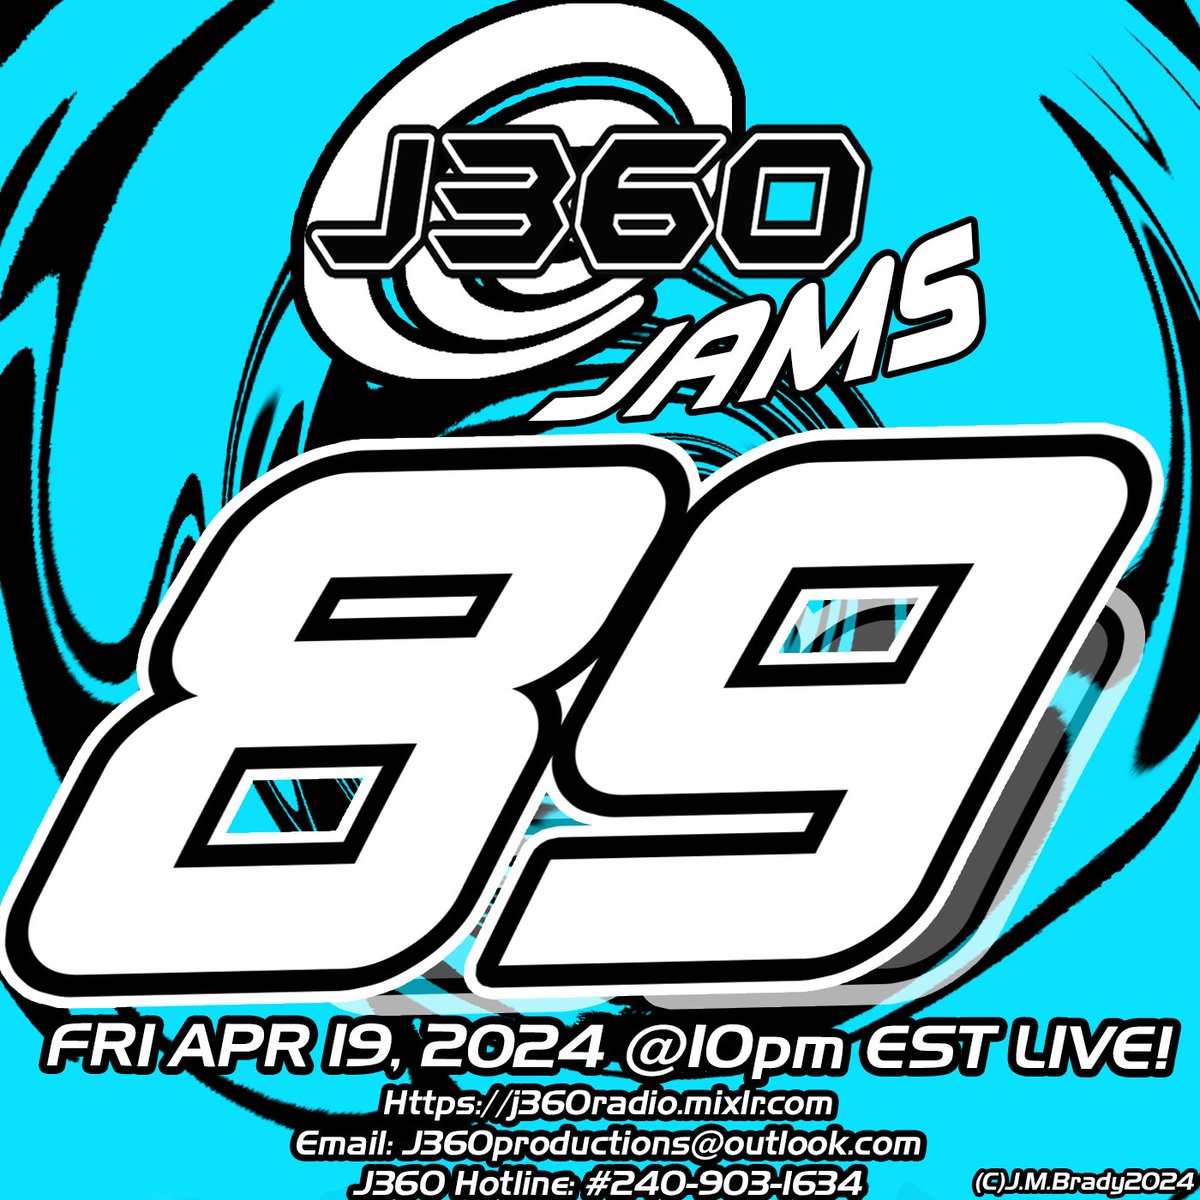 J360 Jams#89
j360radio.mixlr.com/events/3341217
#music #j360radio #musicmix #synthwave #rock #rap #hiphop #supportindiemusic #entertainment #liveradio #newepisode